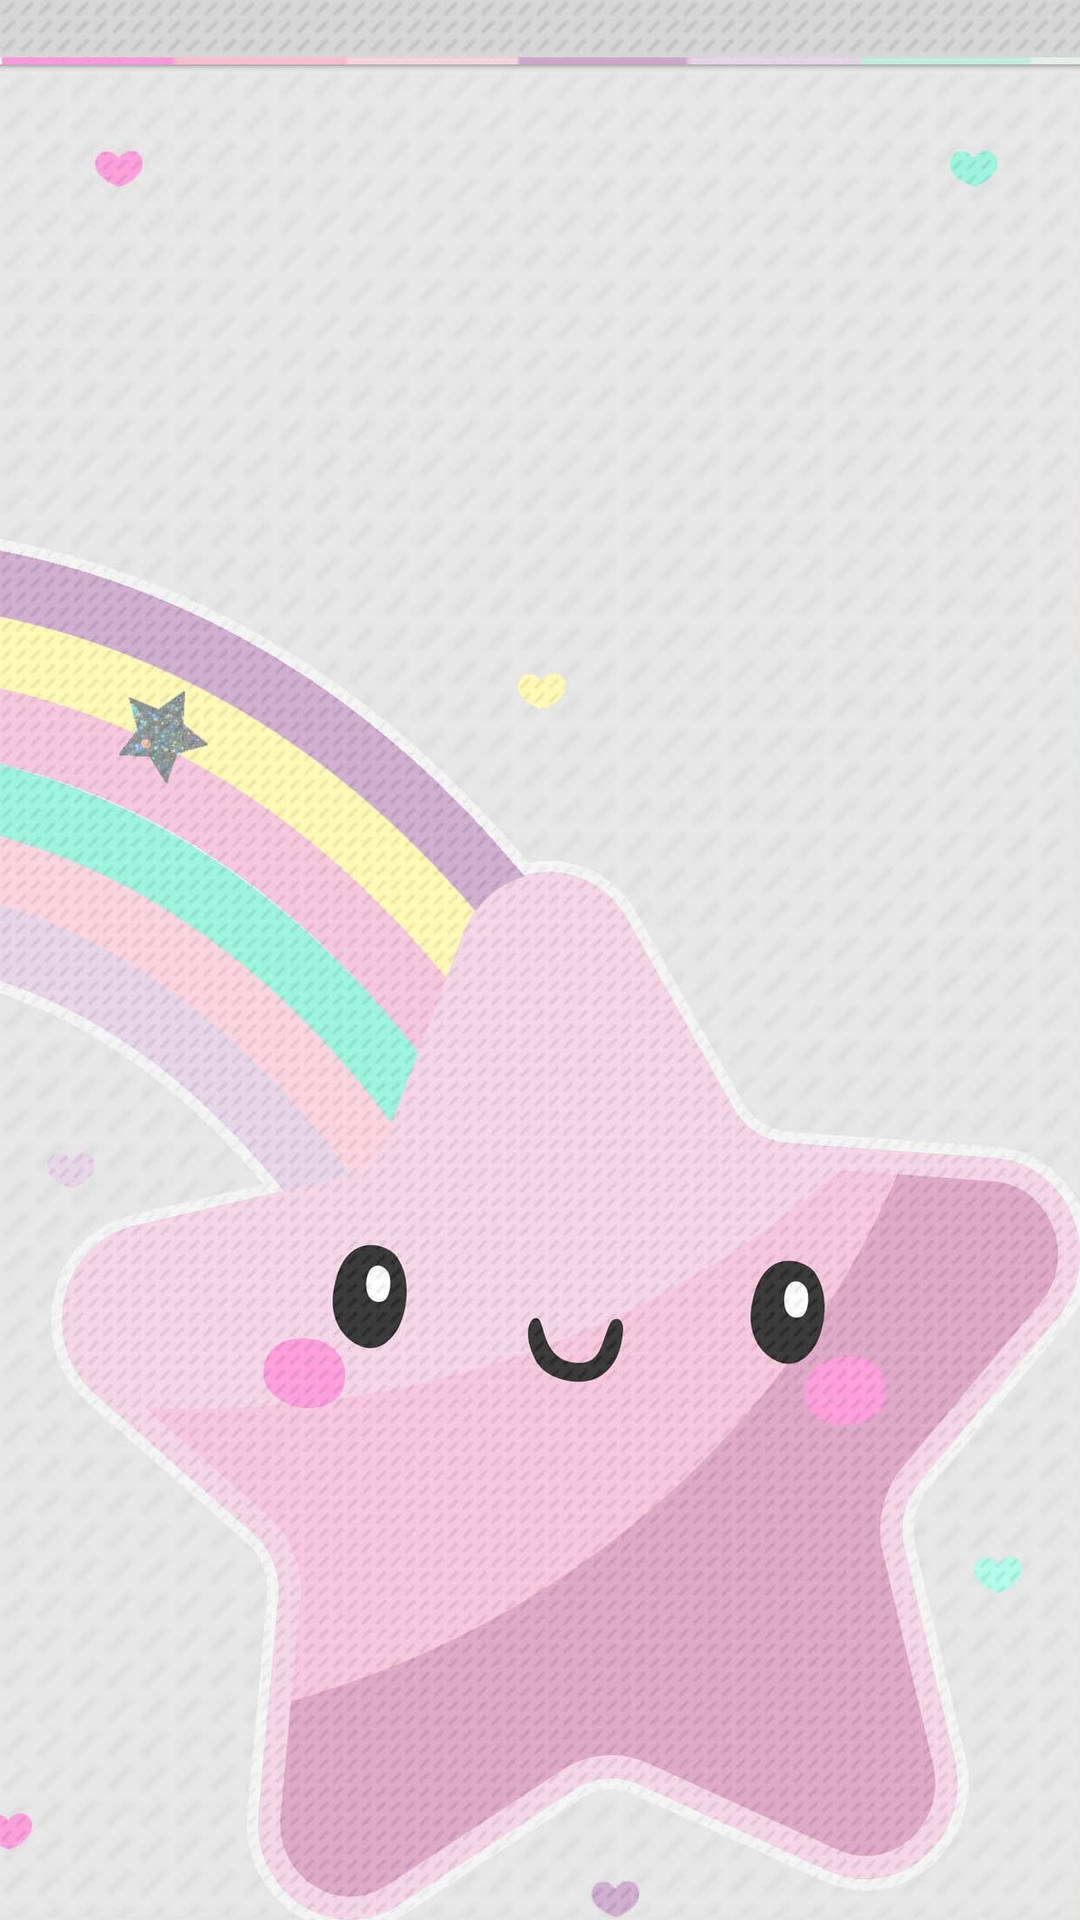 Rainbow Star Cute Iphone Lock Screen Background